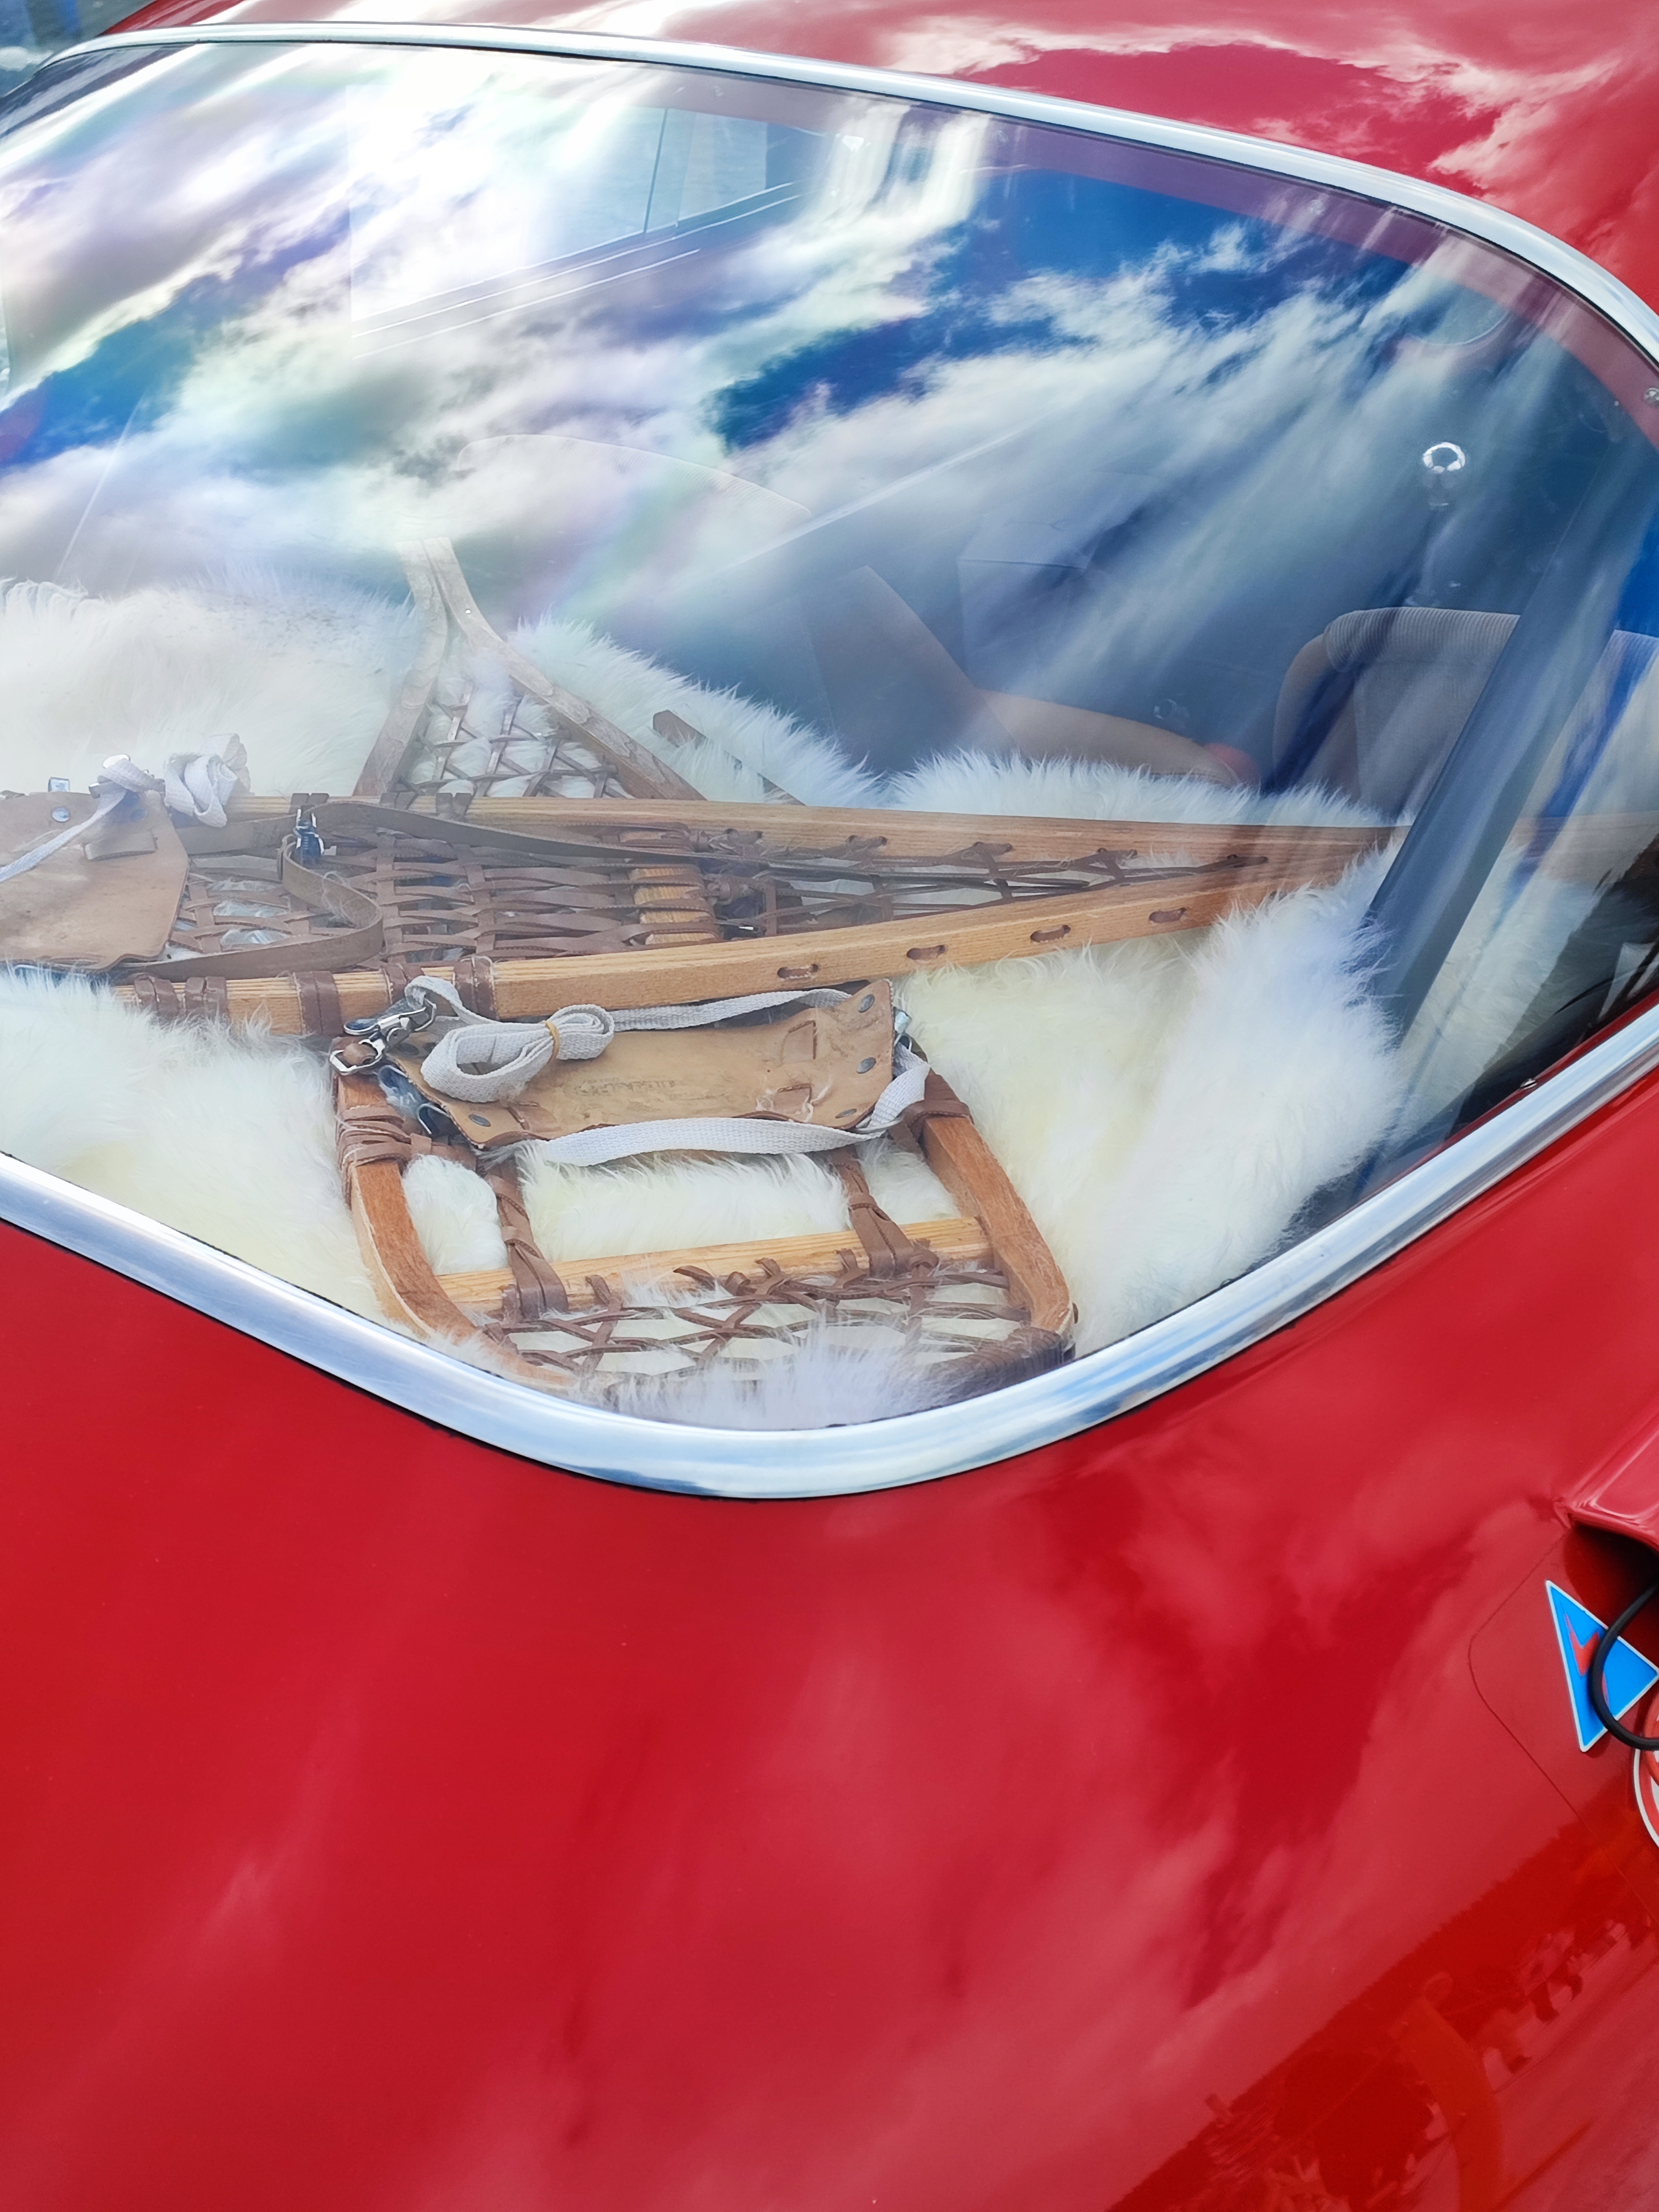 THE ICE St. Moritz - Super Cars